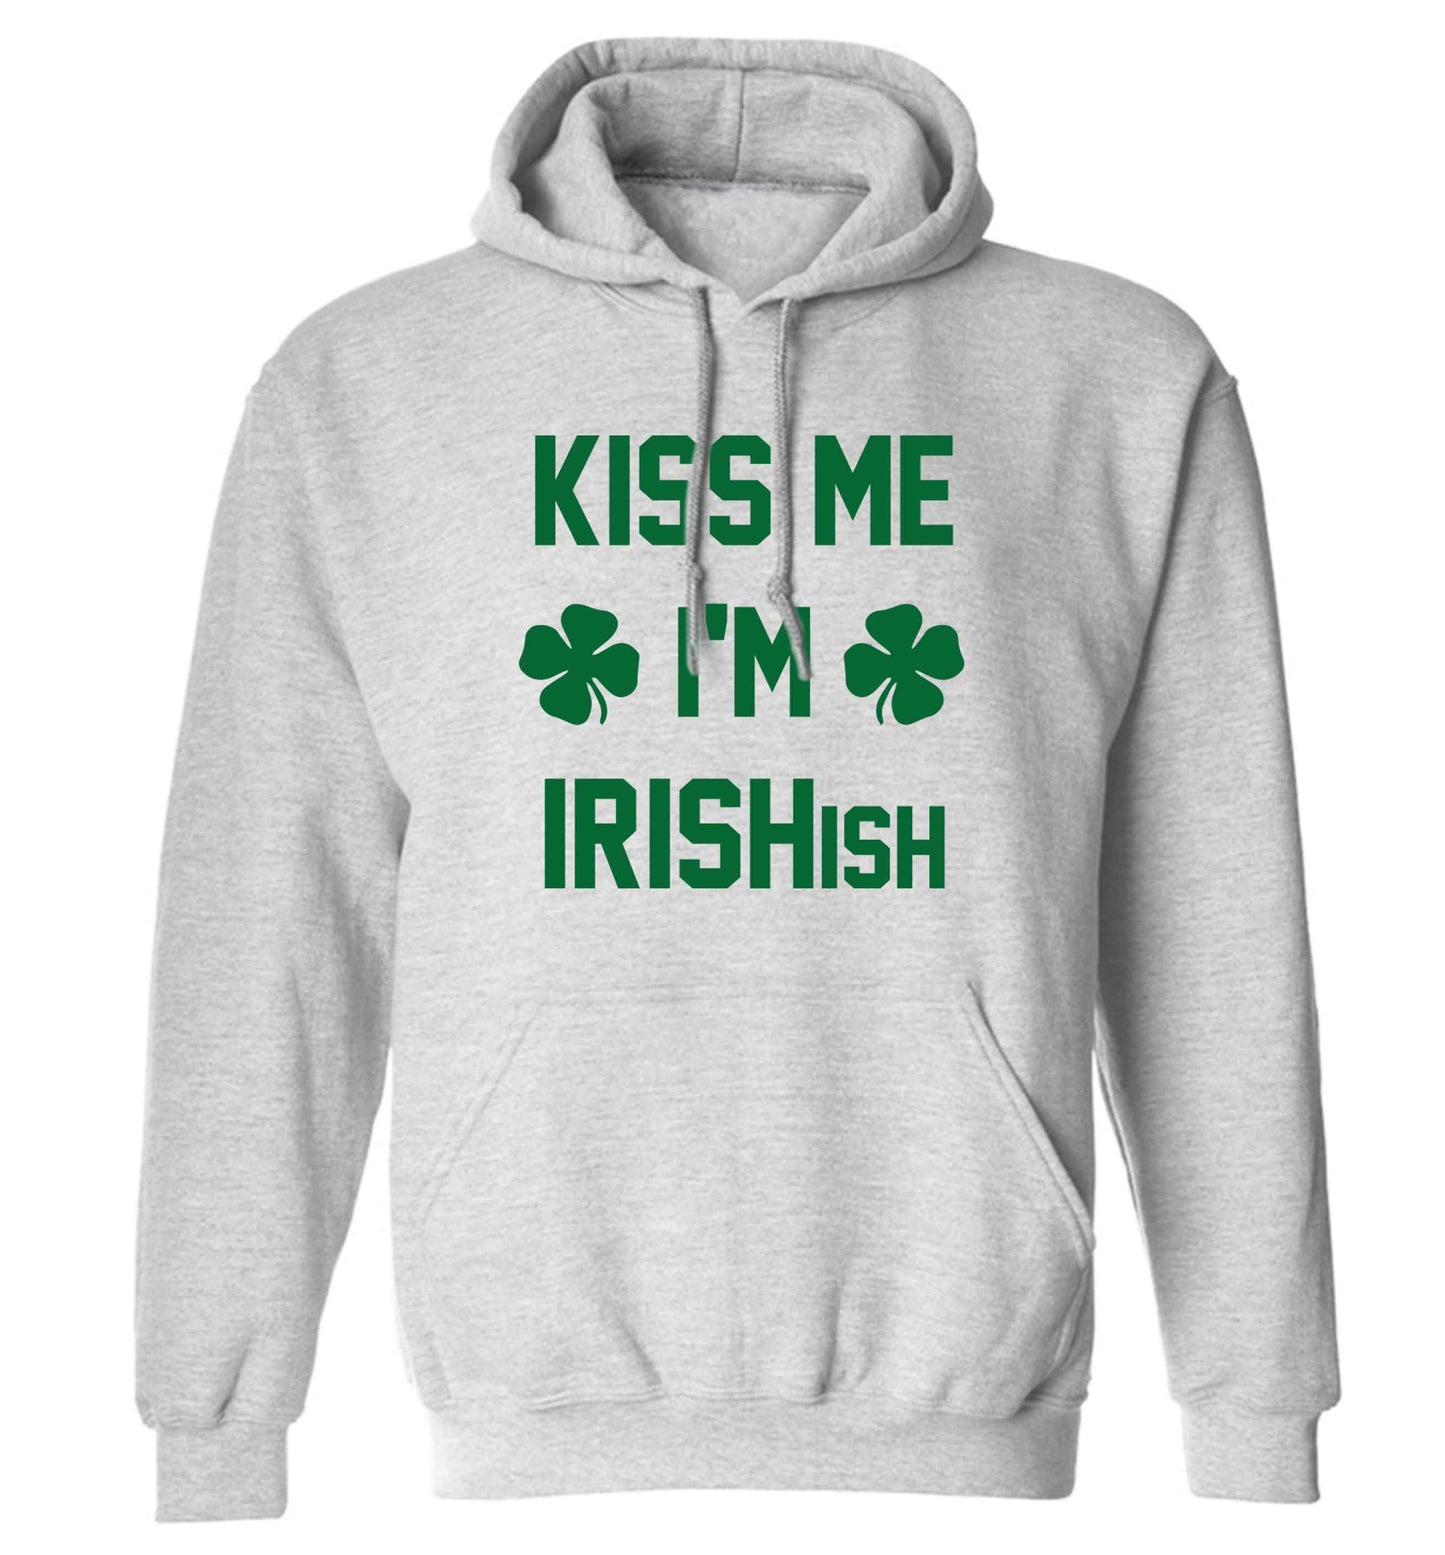 Kiss me I'm Irishish adults unisex grey hoodie 2XL